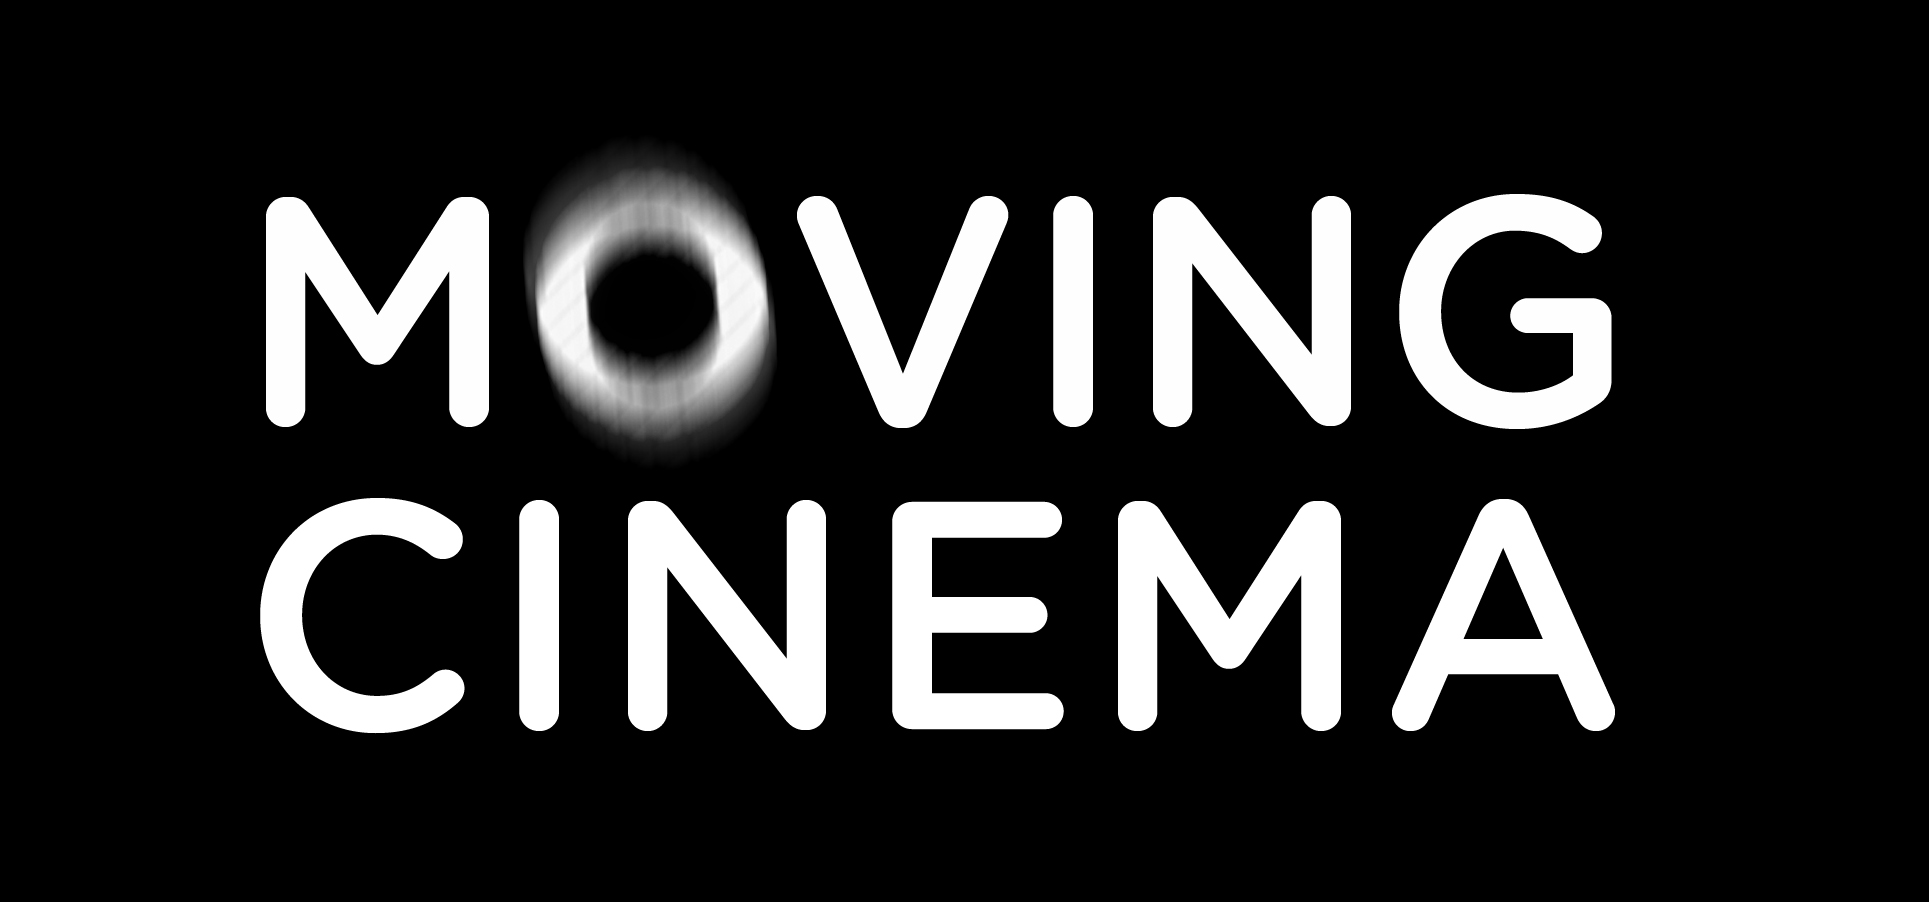 moving cinema